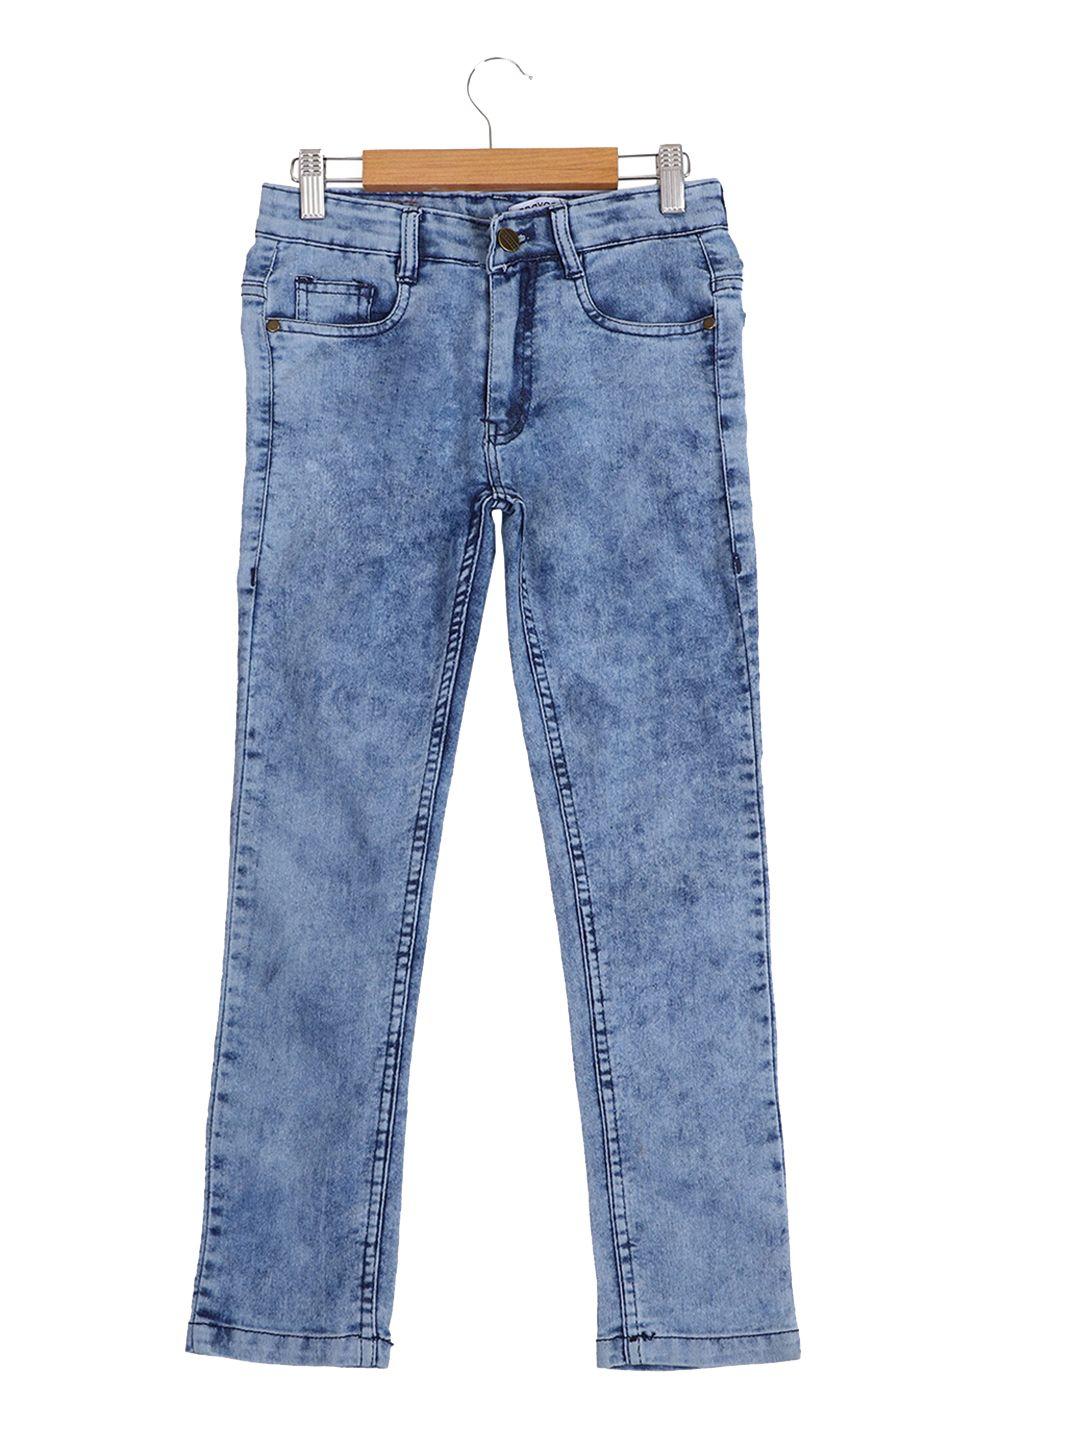 provogue-boys-mid-rise-heavy-fade-jeans